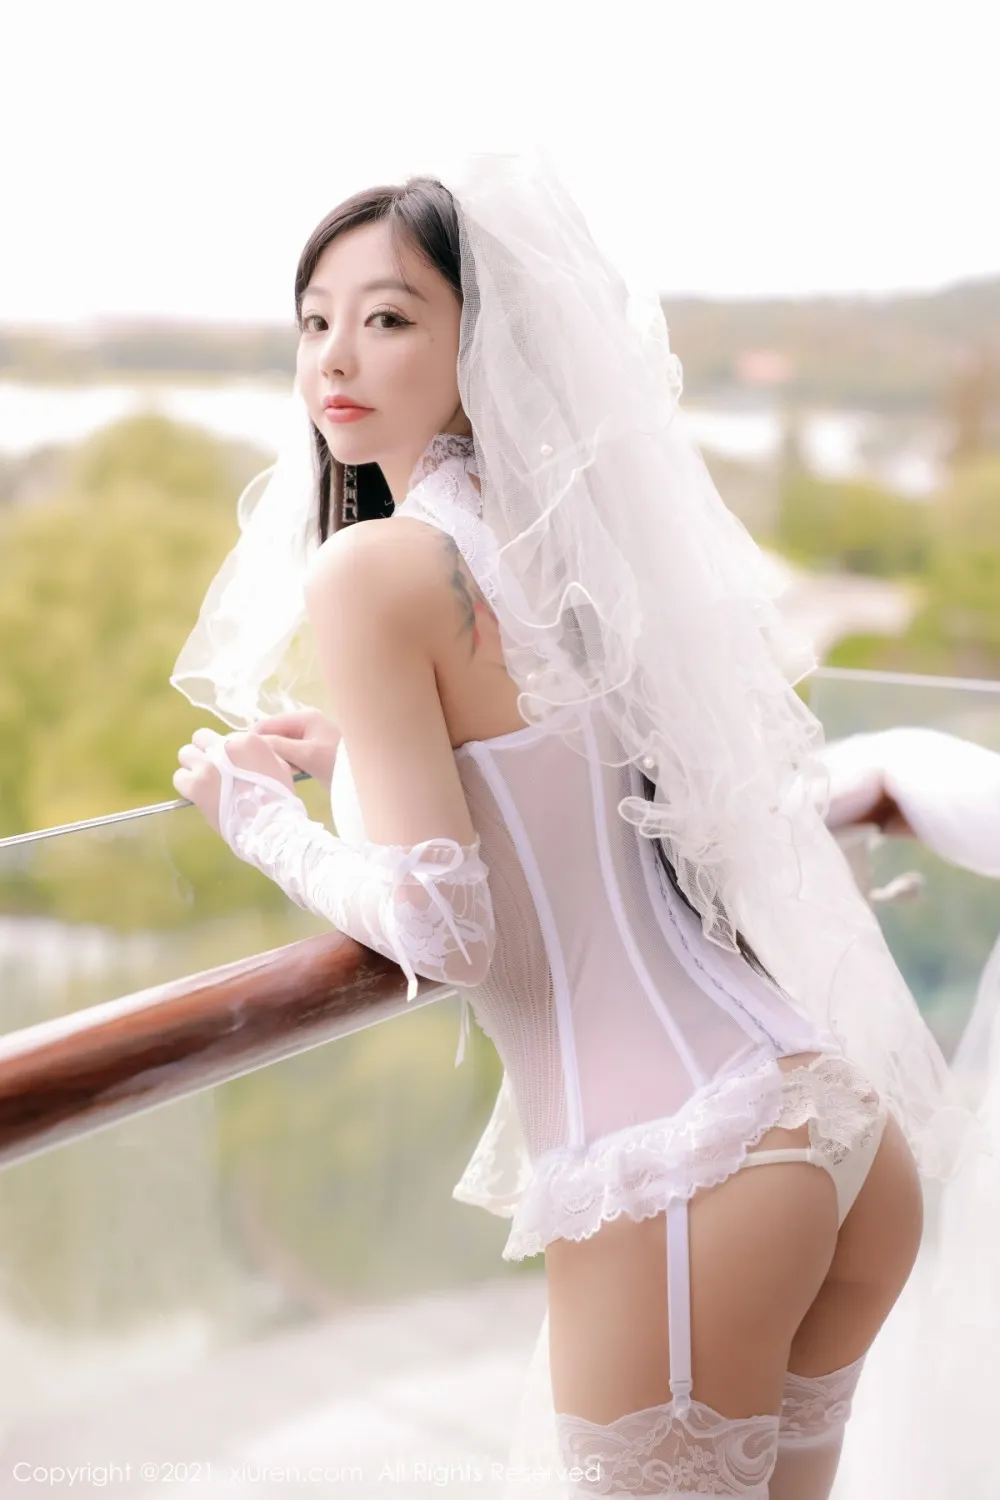 XIUREN(秀人网) NO.4339 Well-developed & Fashionable Chinese Goddess 佘贝拉bella_性感婚纱